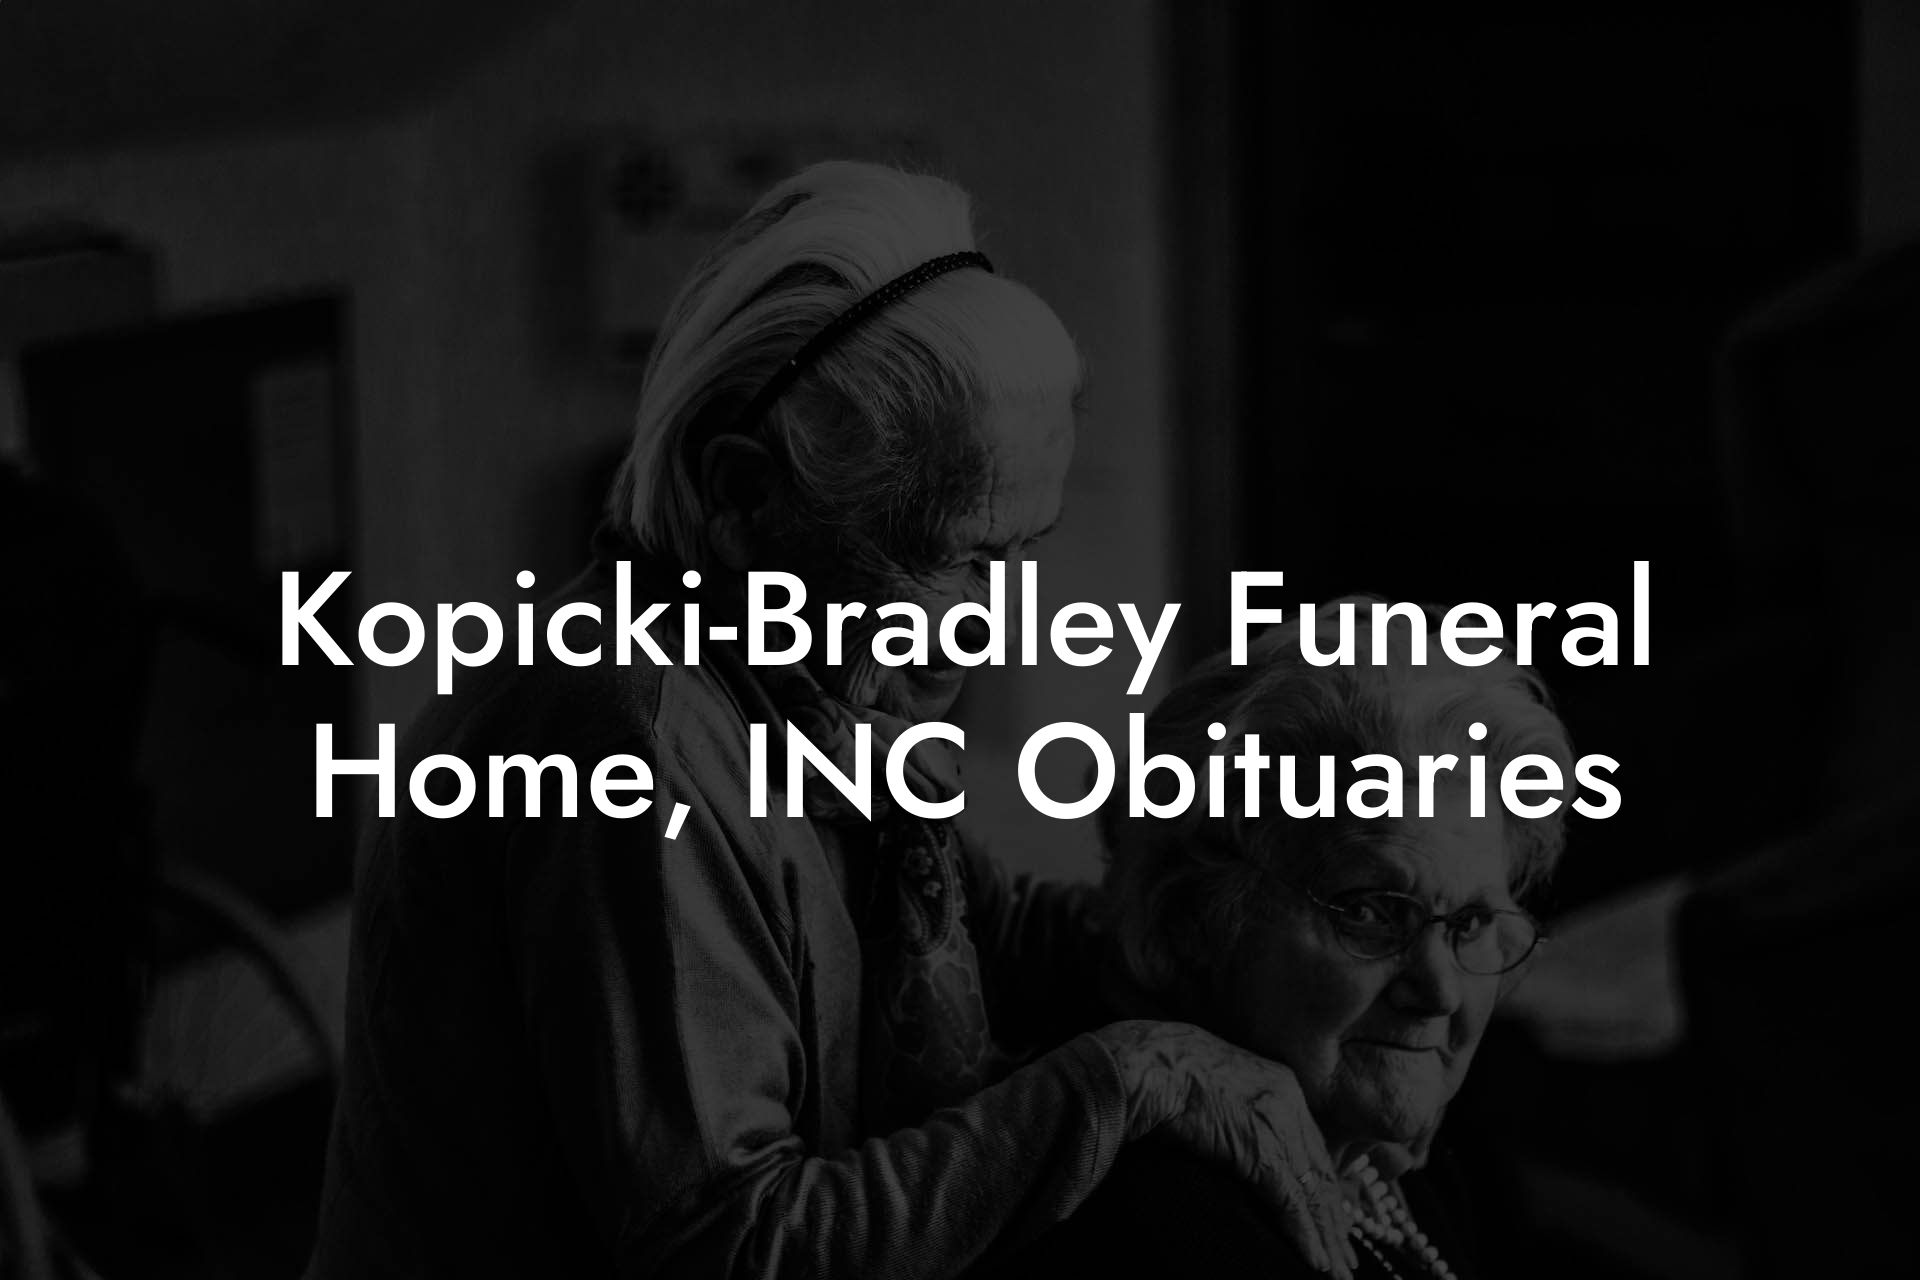 Kopicki-Bradley Funeral Home, INC Obituaries